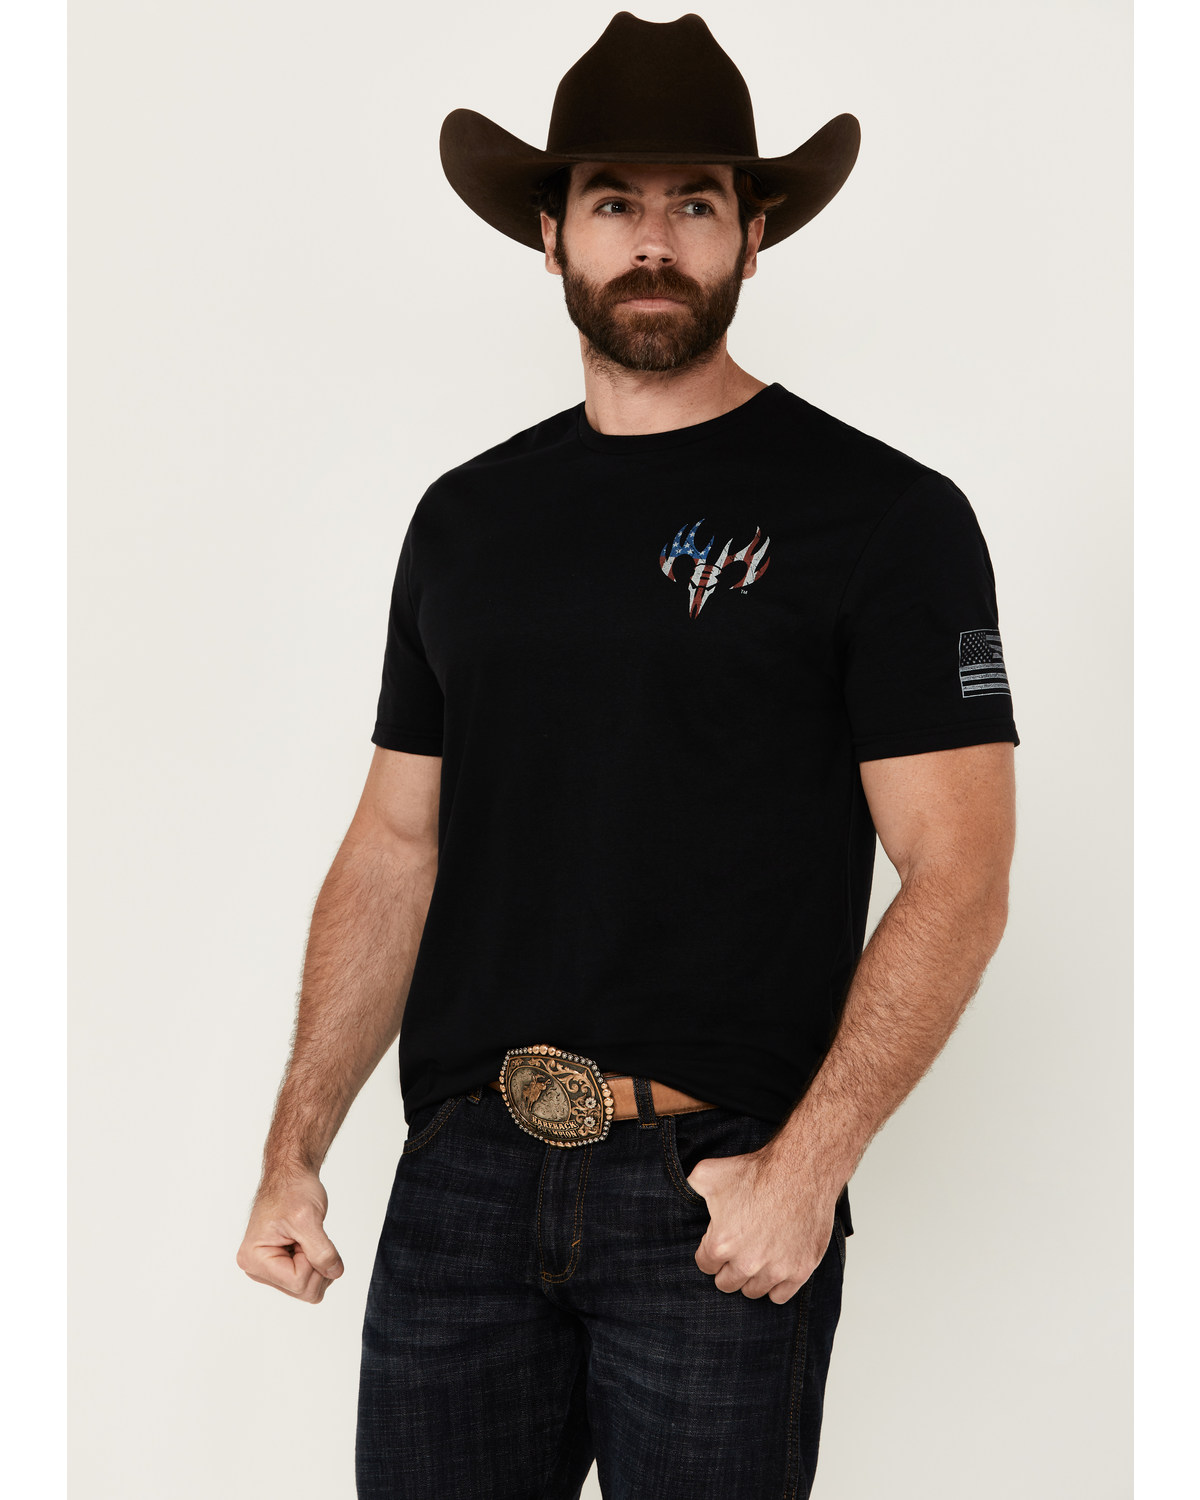 Buckwear Men's Freedom Infringed Short Sleeve Graphic T-Shirt